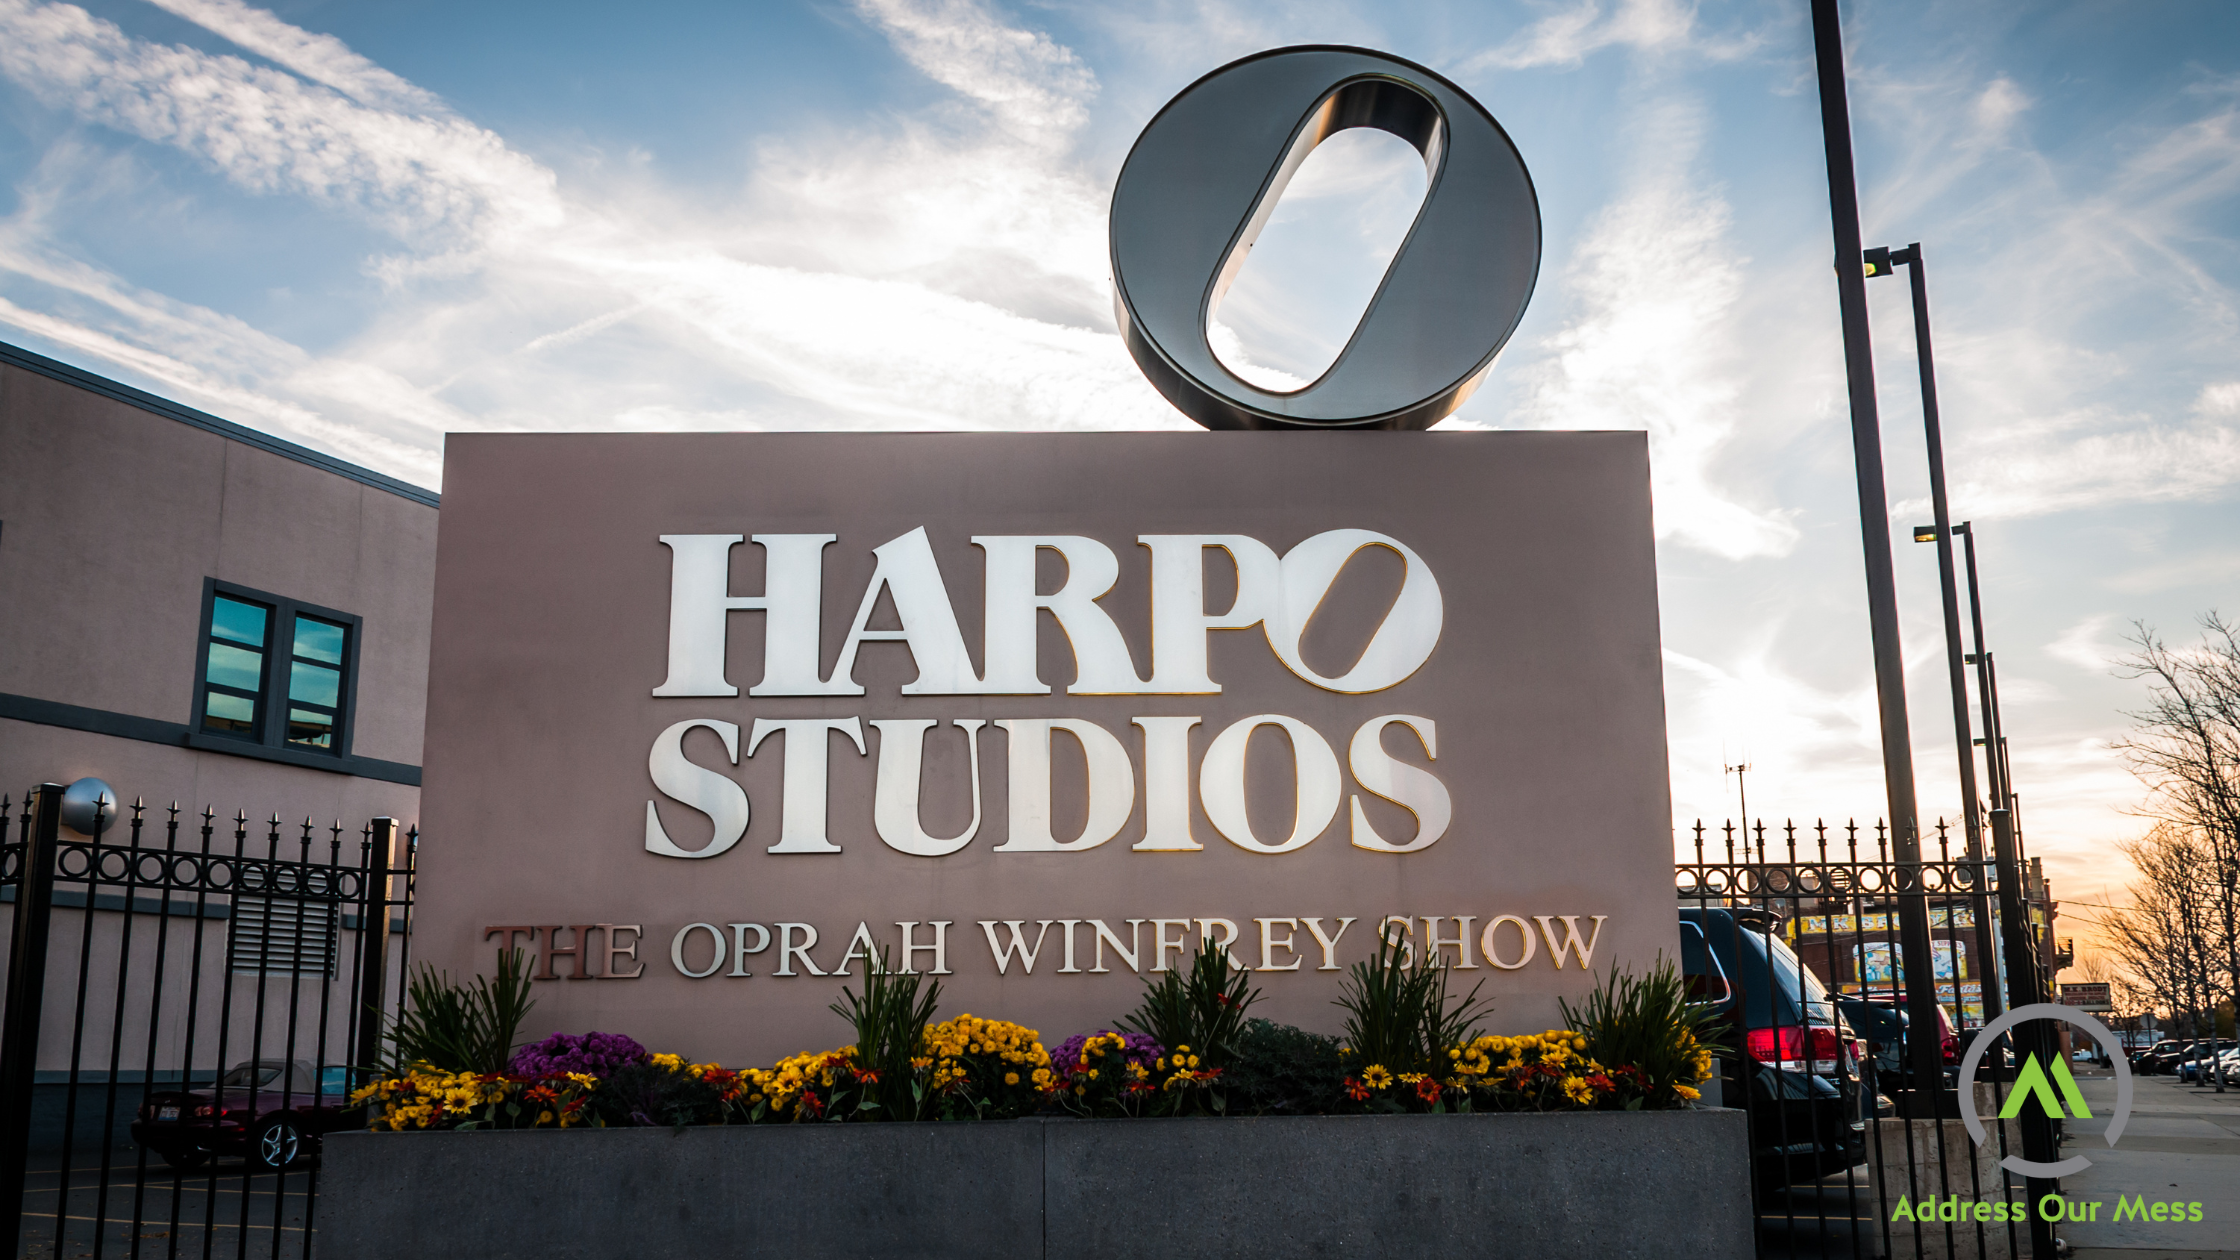 Oprah's studio sign banner